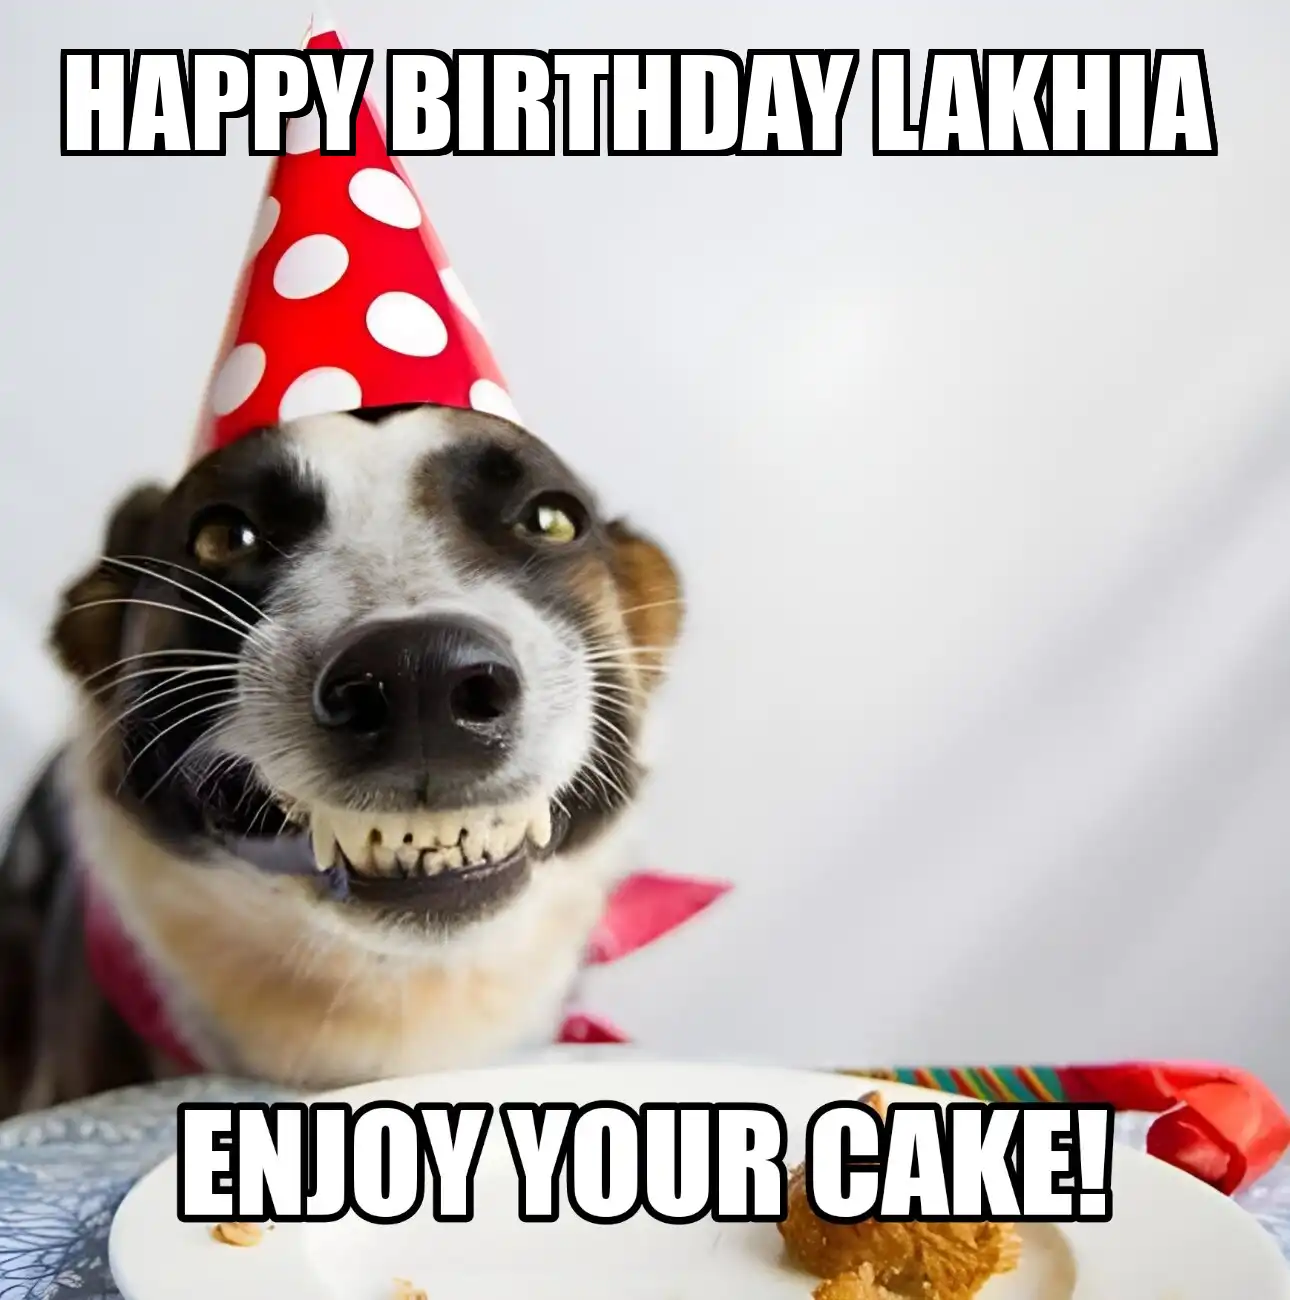 Happy Birthday Lakhia Enjoy Your Cake Dog Meme